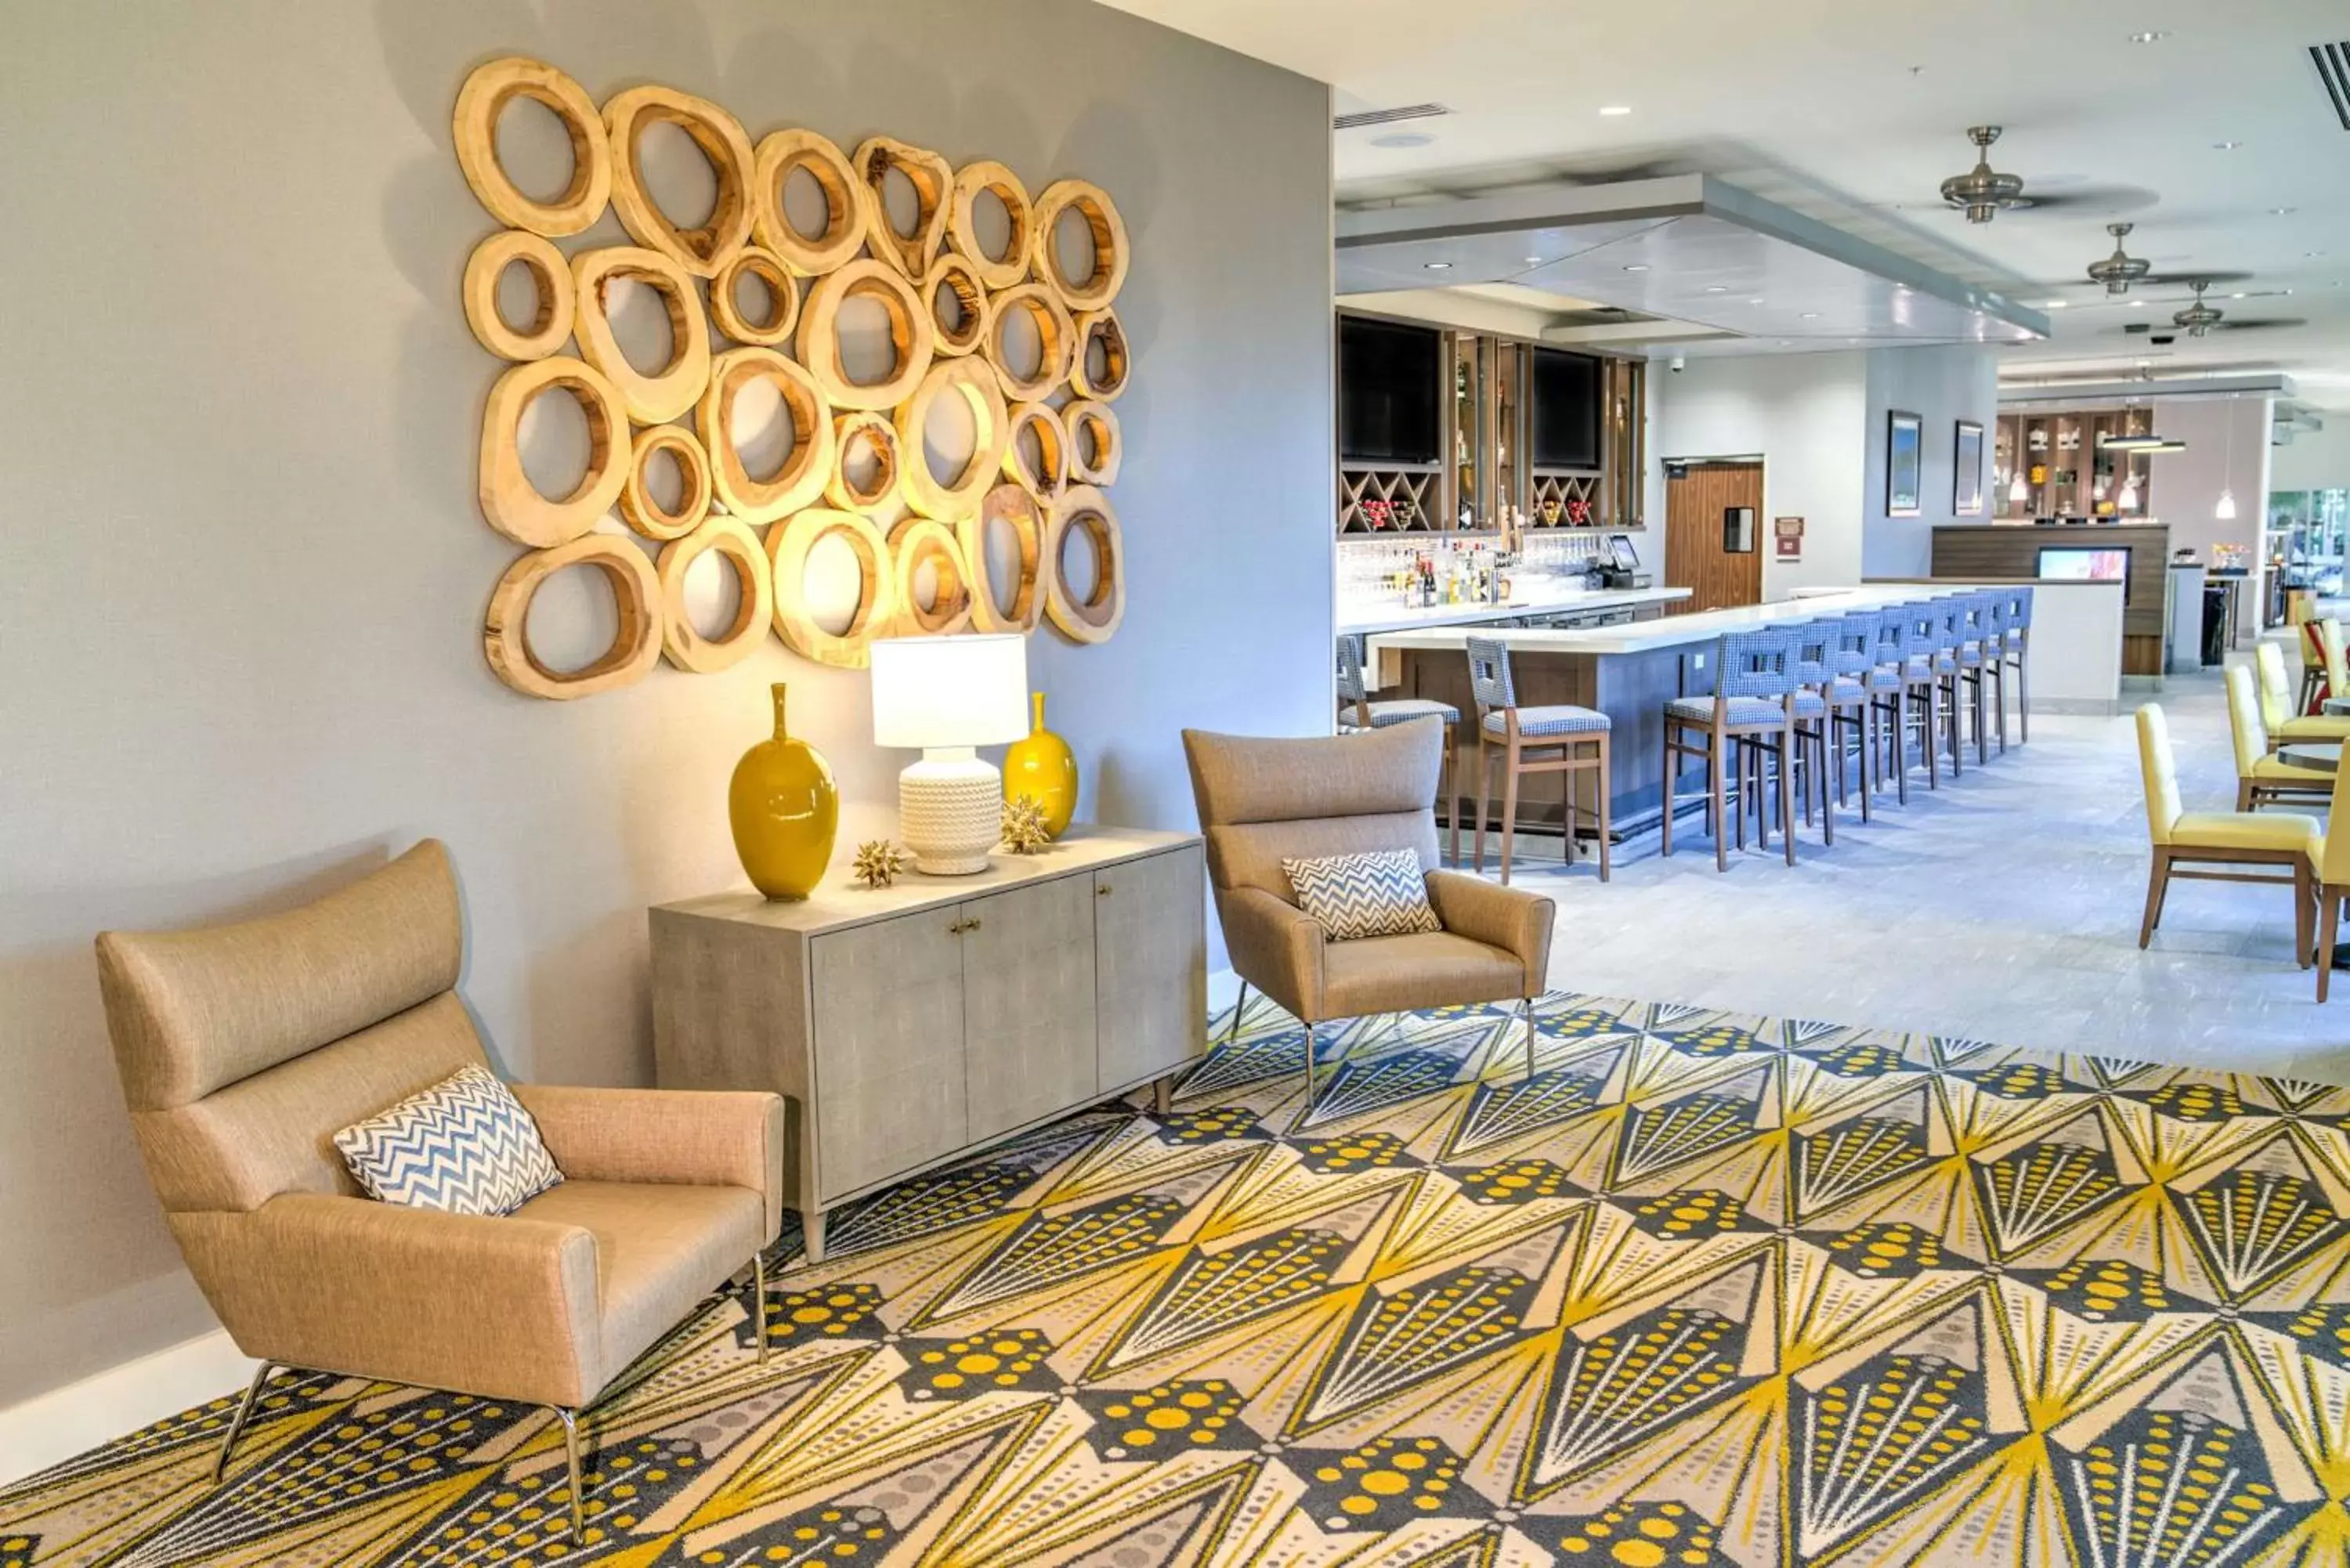 Lounge or bar, Seating Area in Hilton Garden Inn Santa Barbara/Goleta